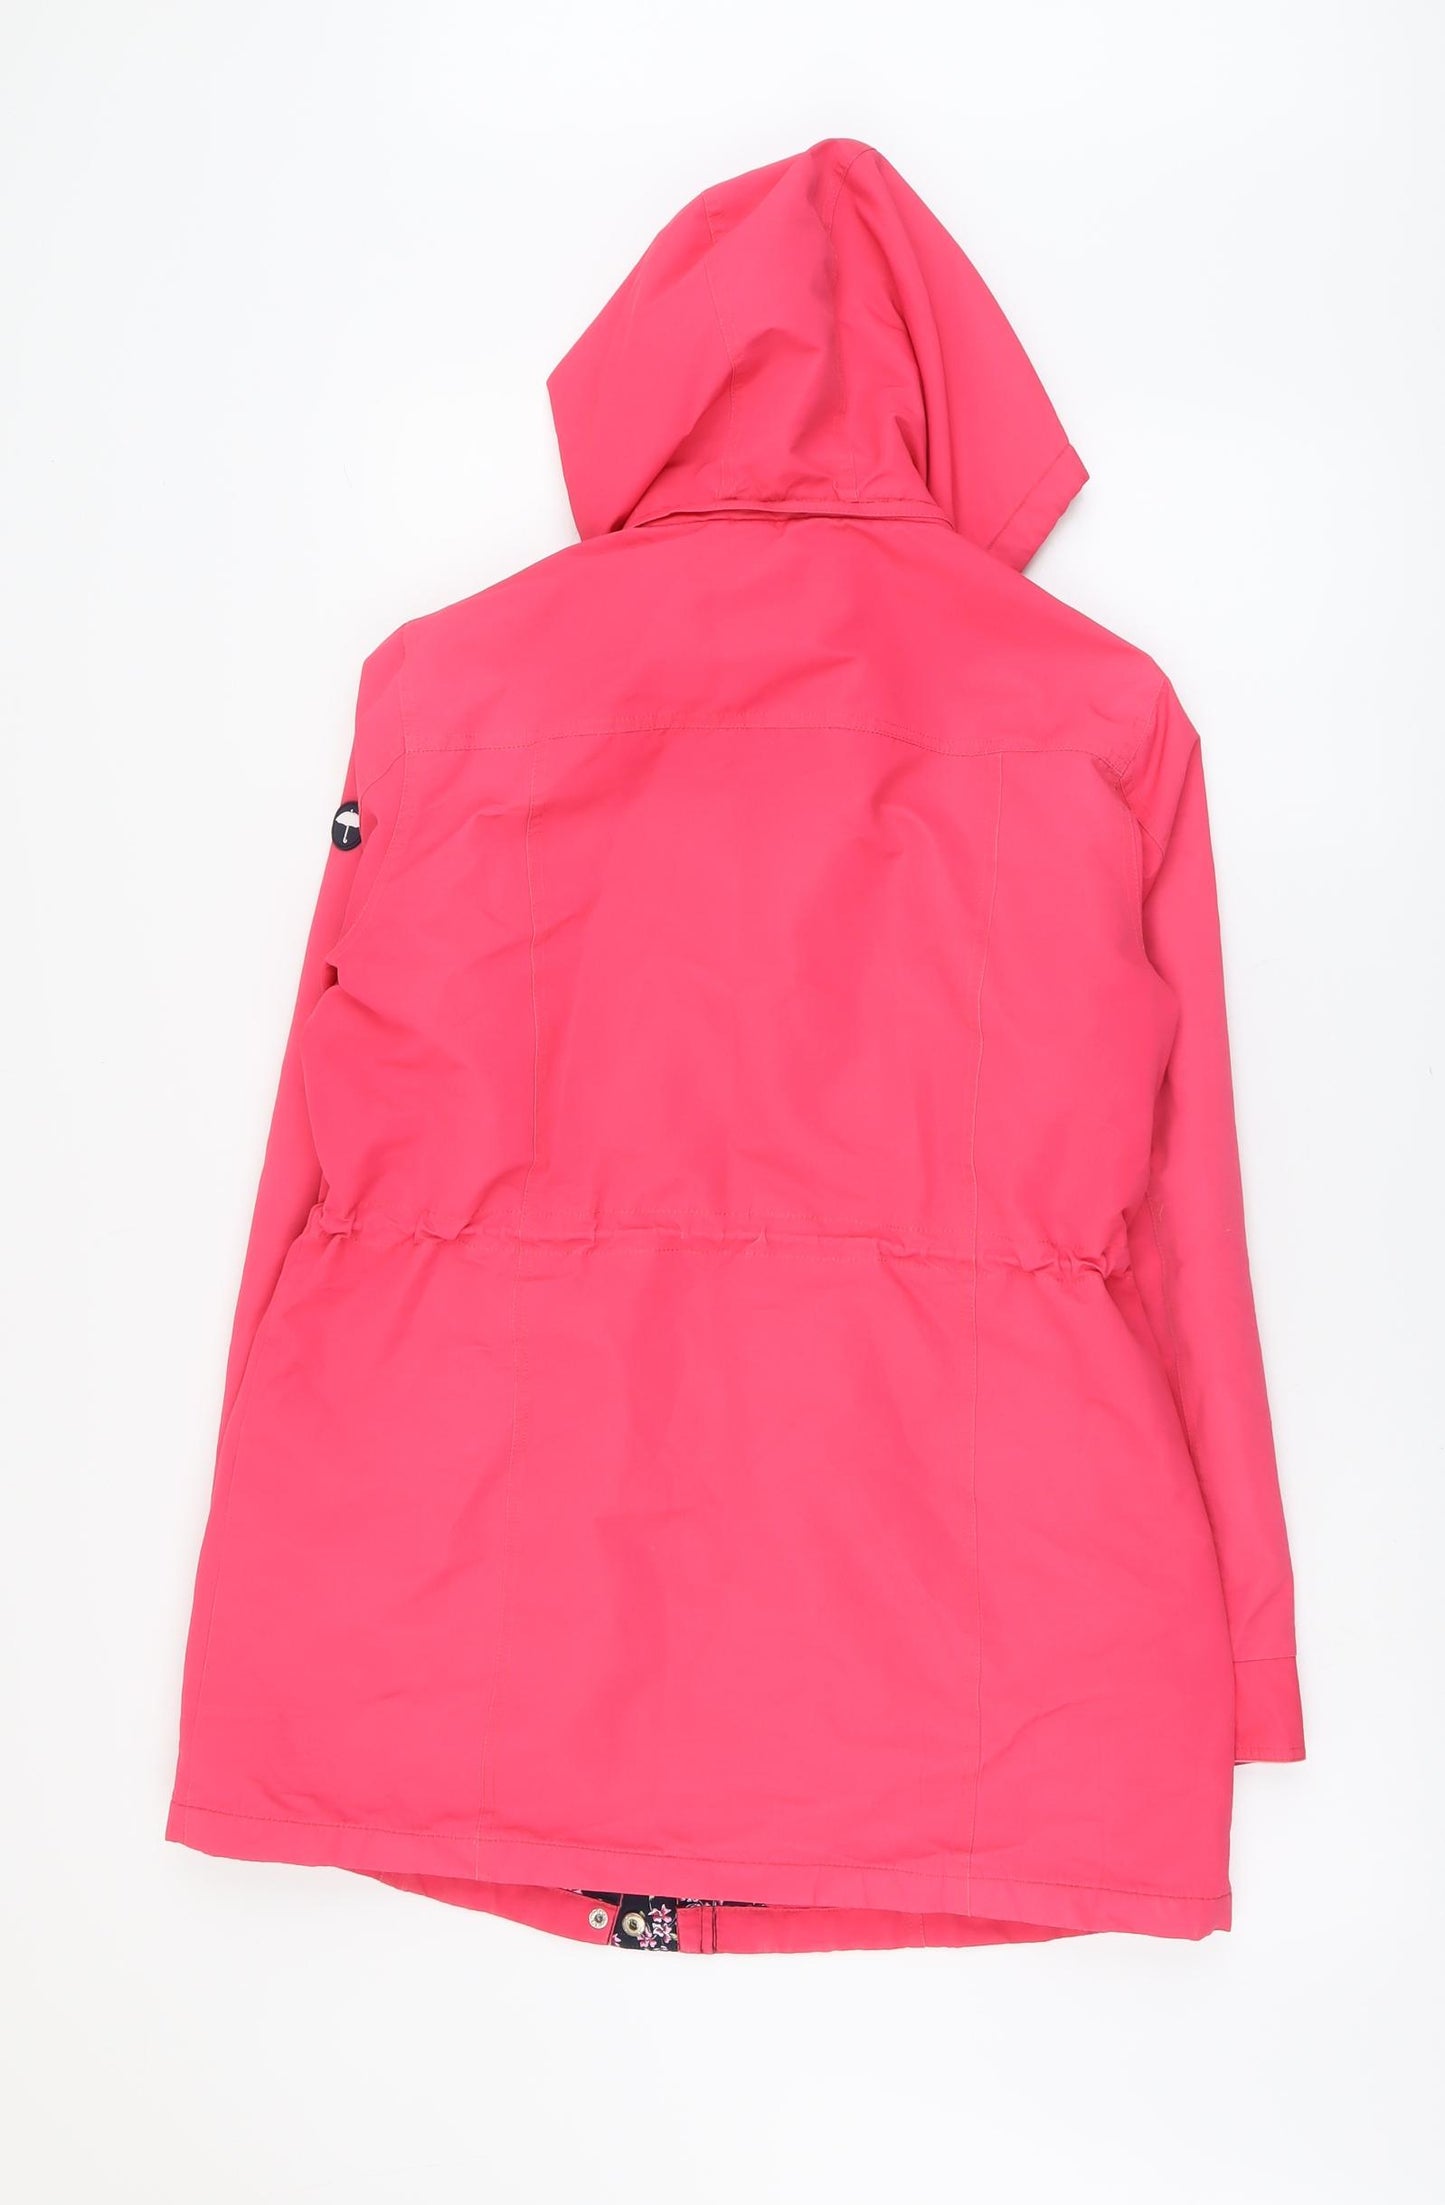 Cotton Traders Womens Pink Pea Coat Coat Size 12 Zip - Hooded